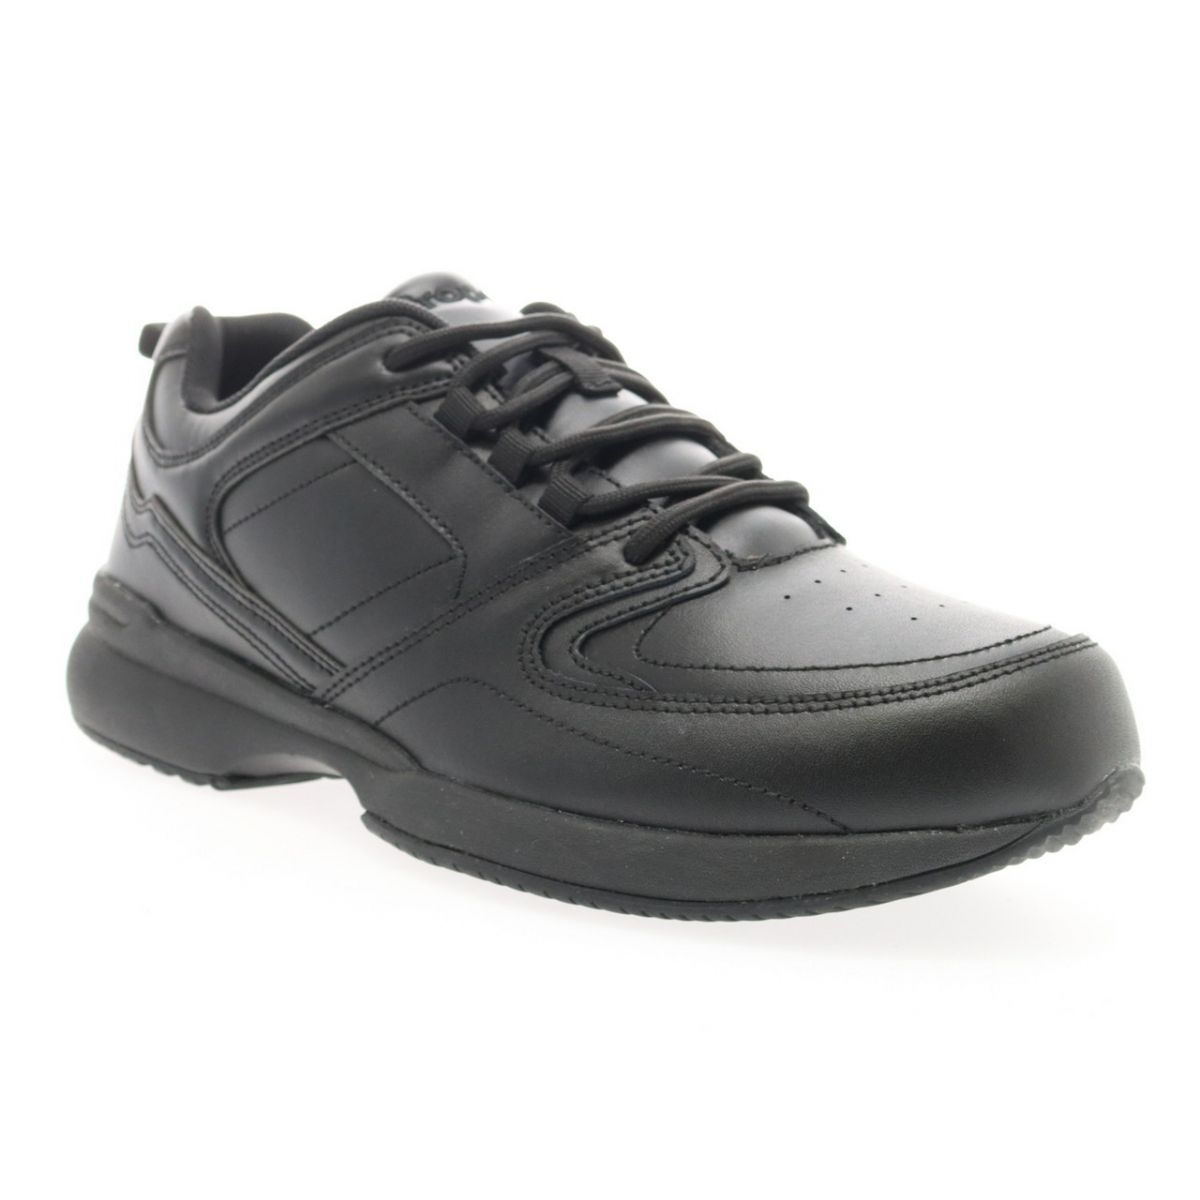 Propet Men's Life Walker Sport Sneaker Black - MAA272LBLK BLACK - BLACK, 8.5